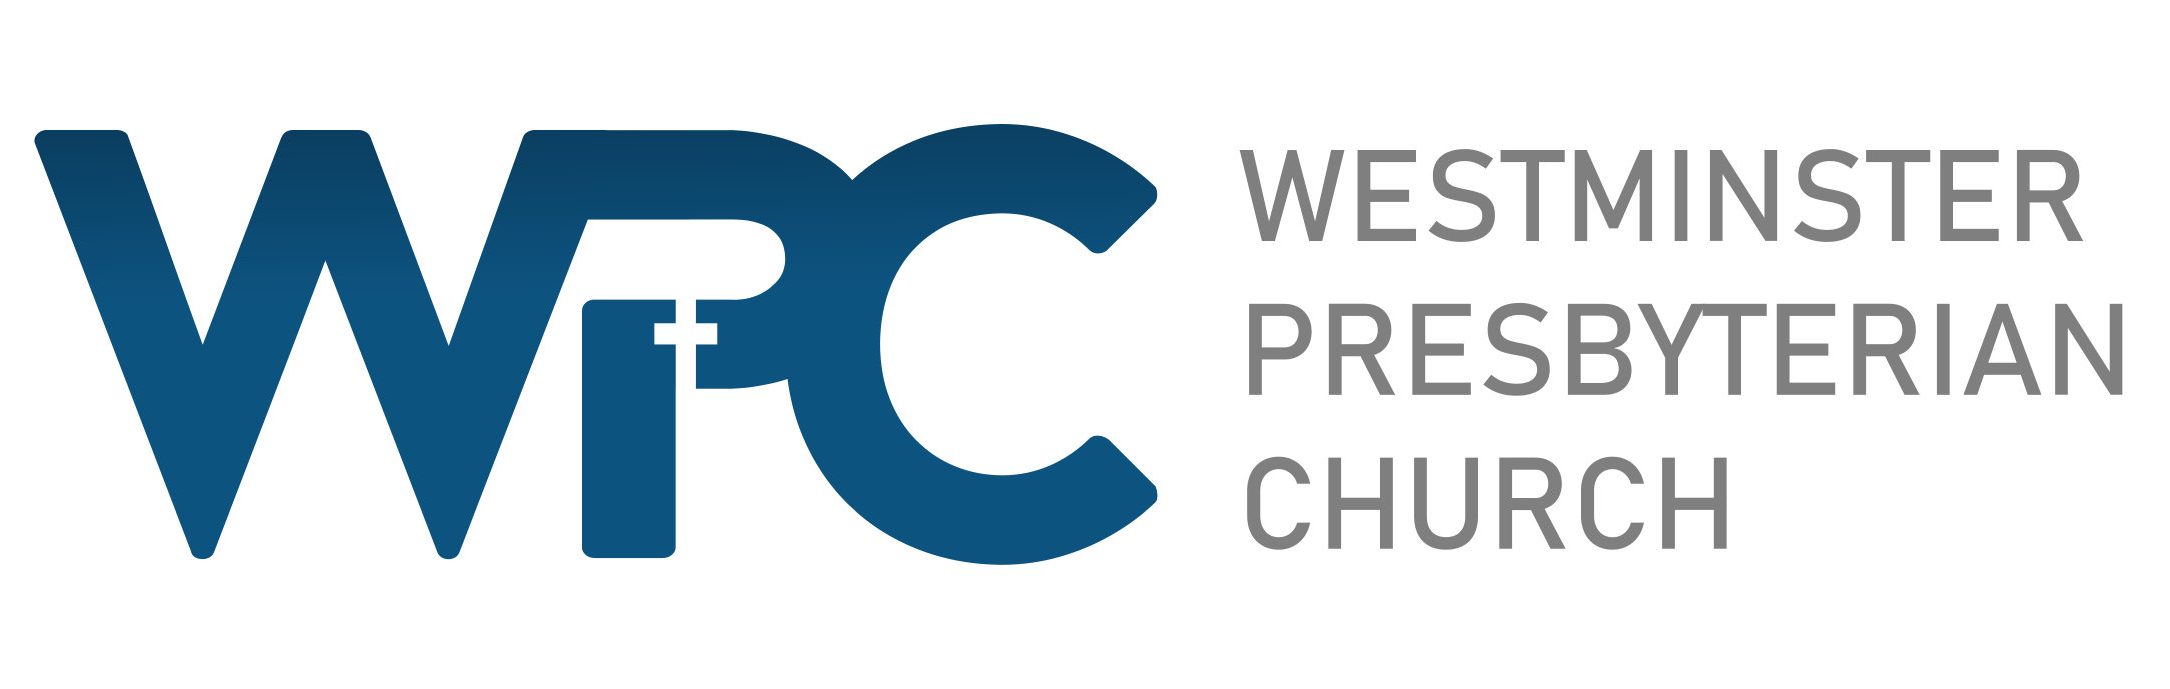 Westminster Presbyterian Church in Australia